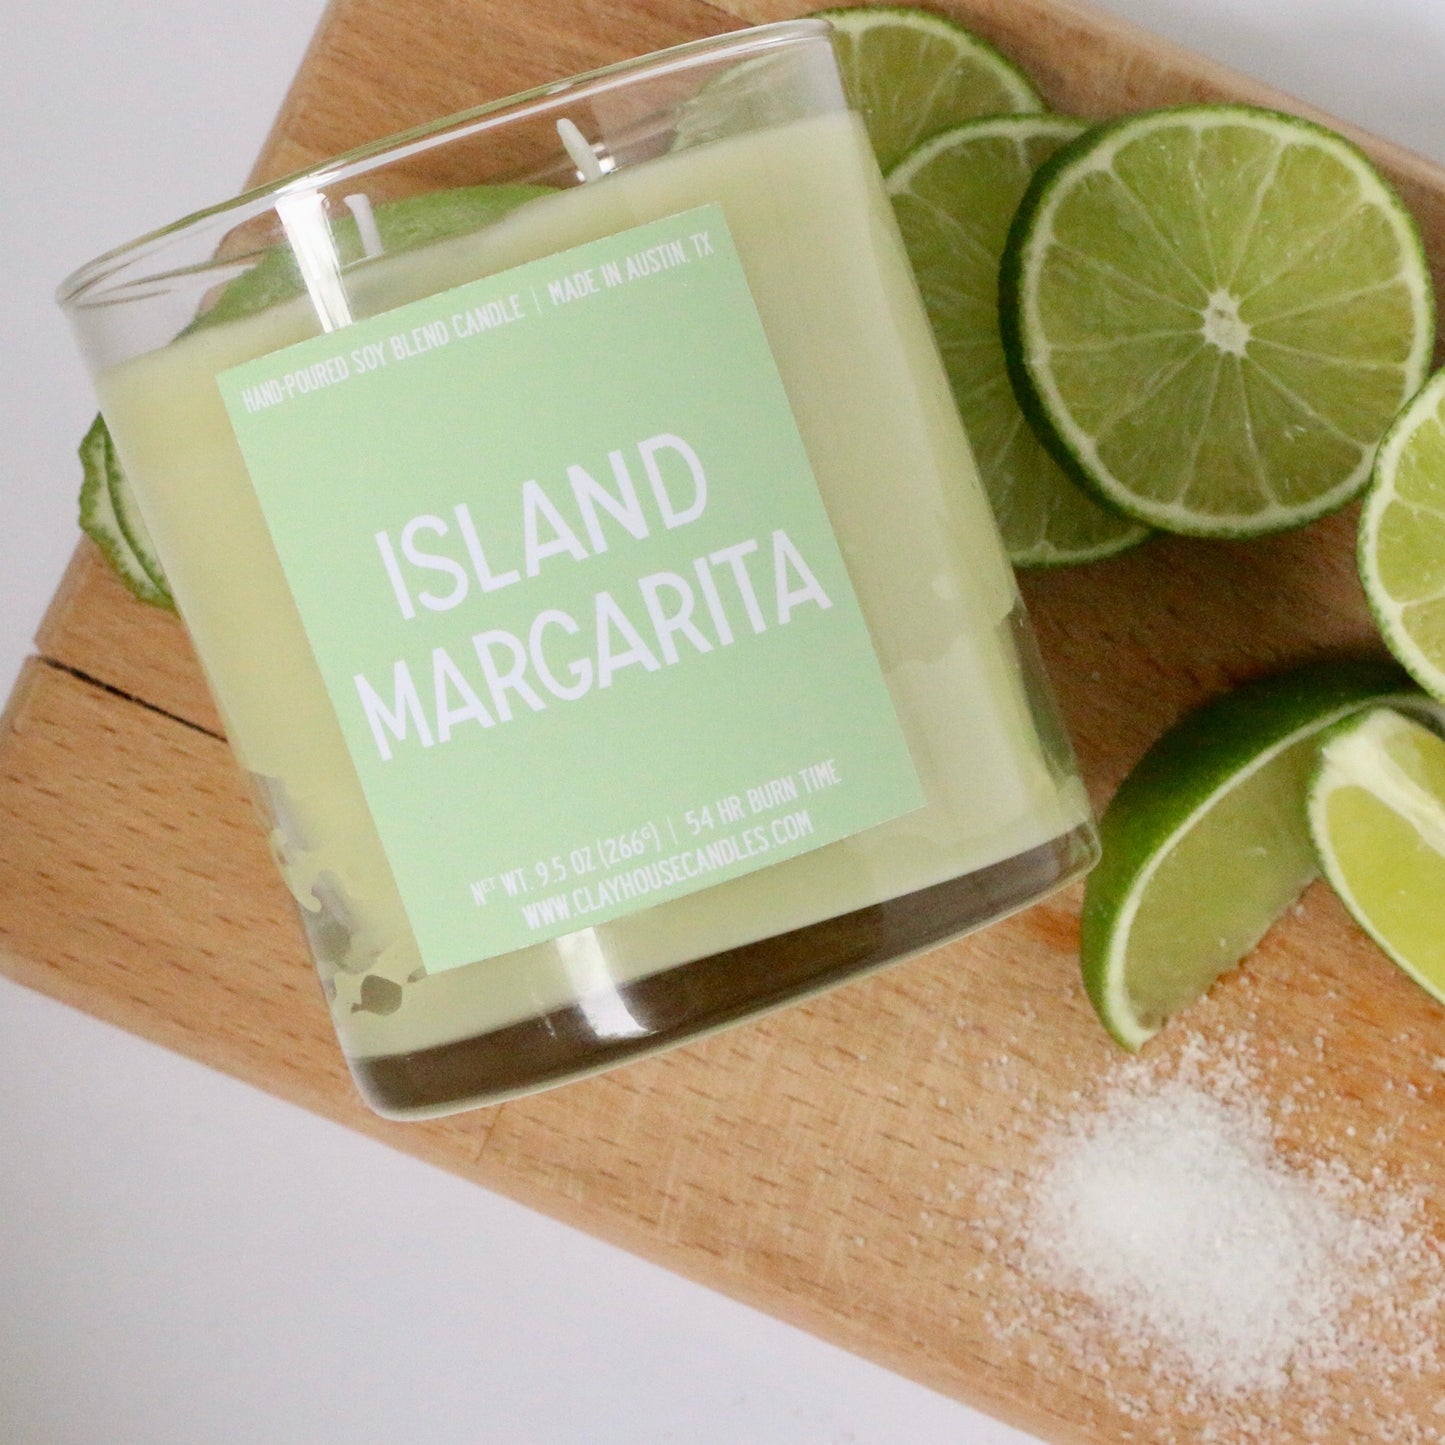 Island Margarita Candle - 2